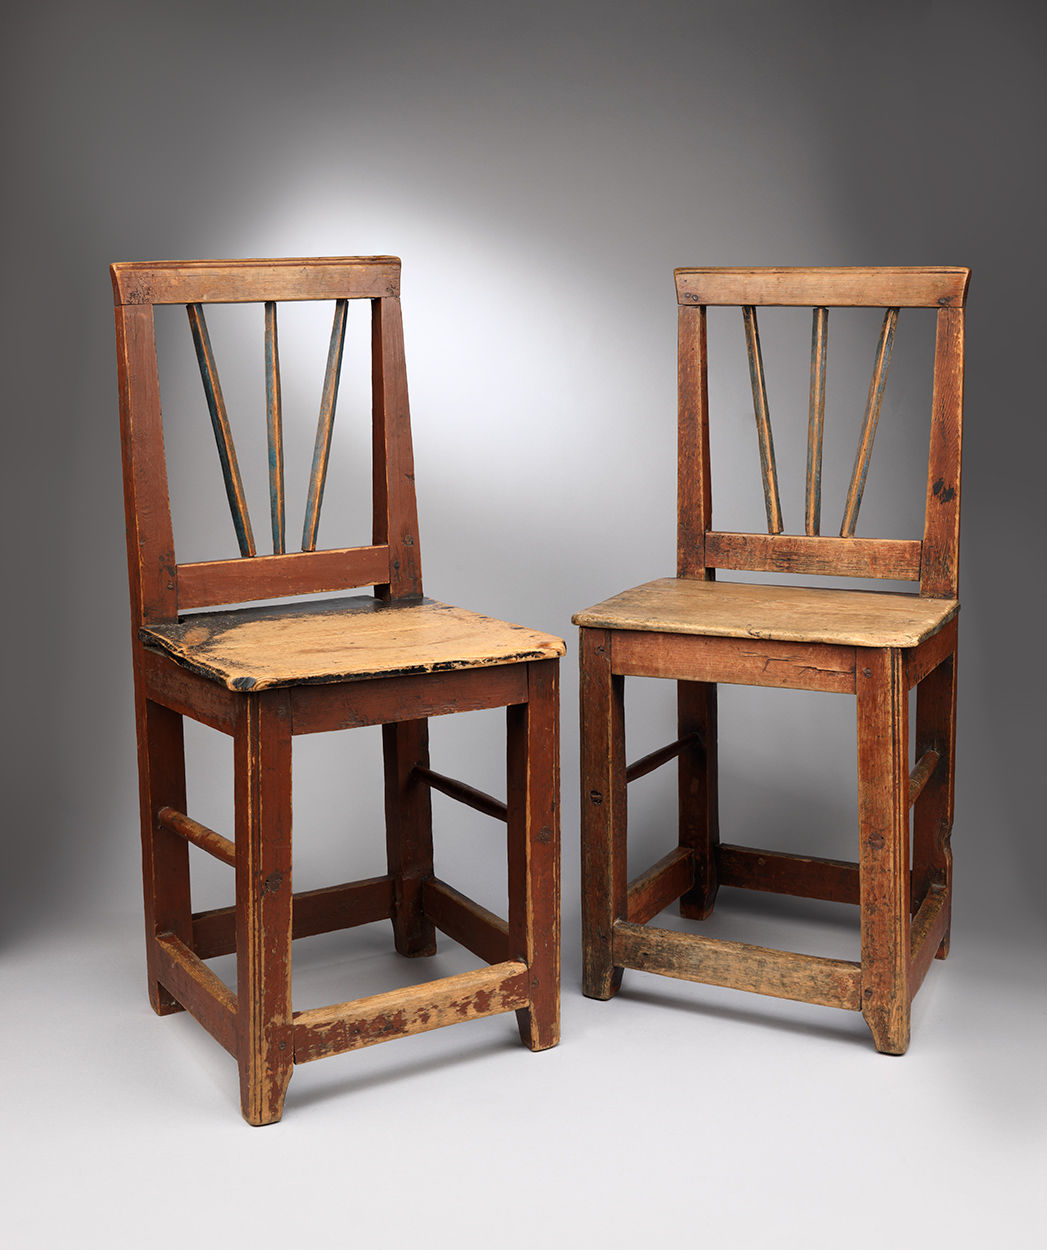 Pair of Folk Art Painted Vernacular Chairs